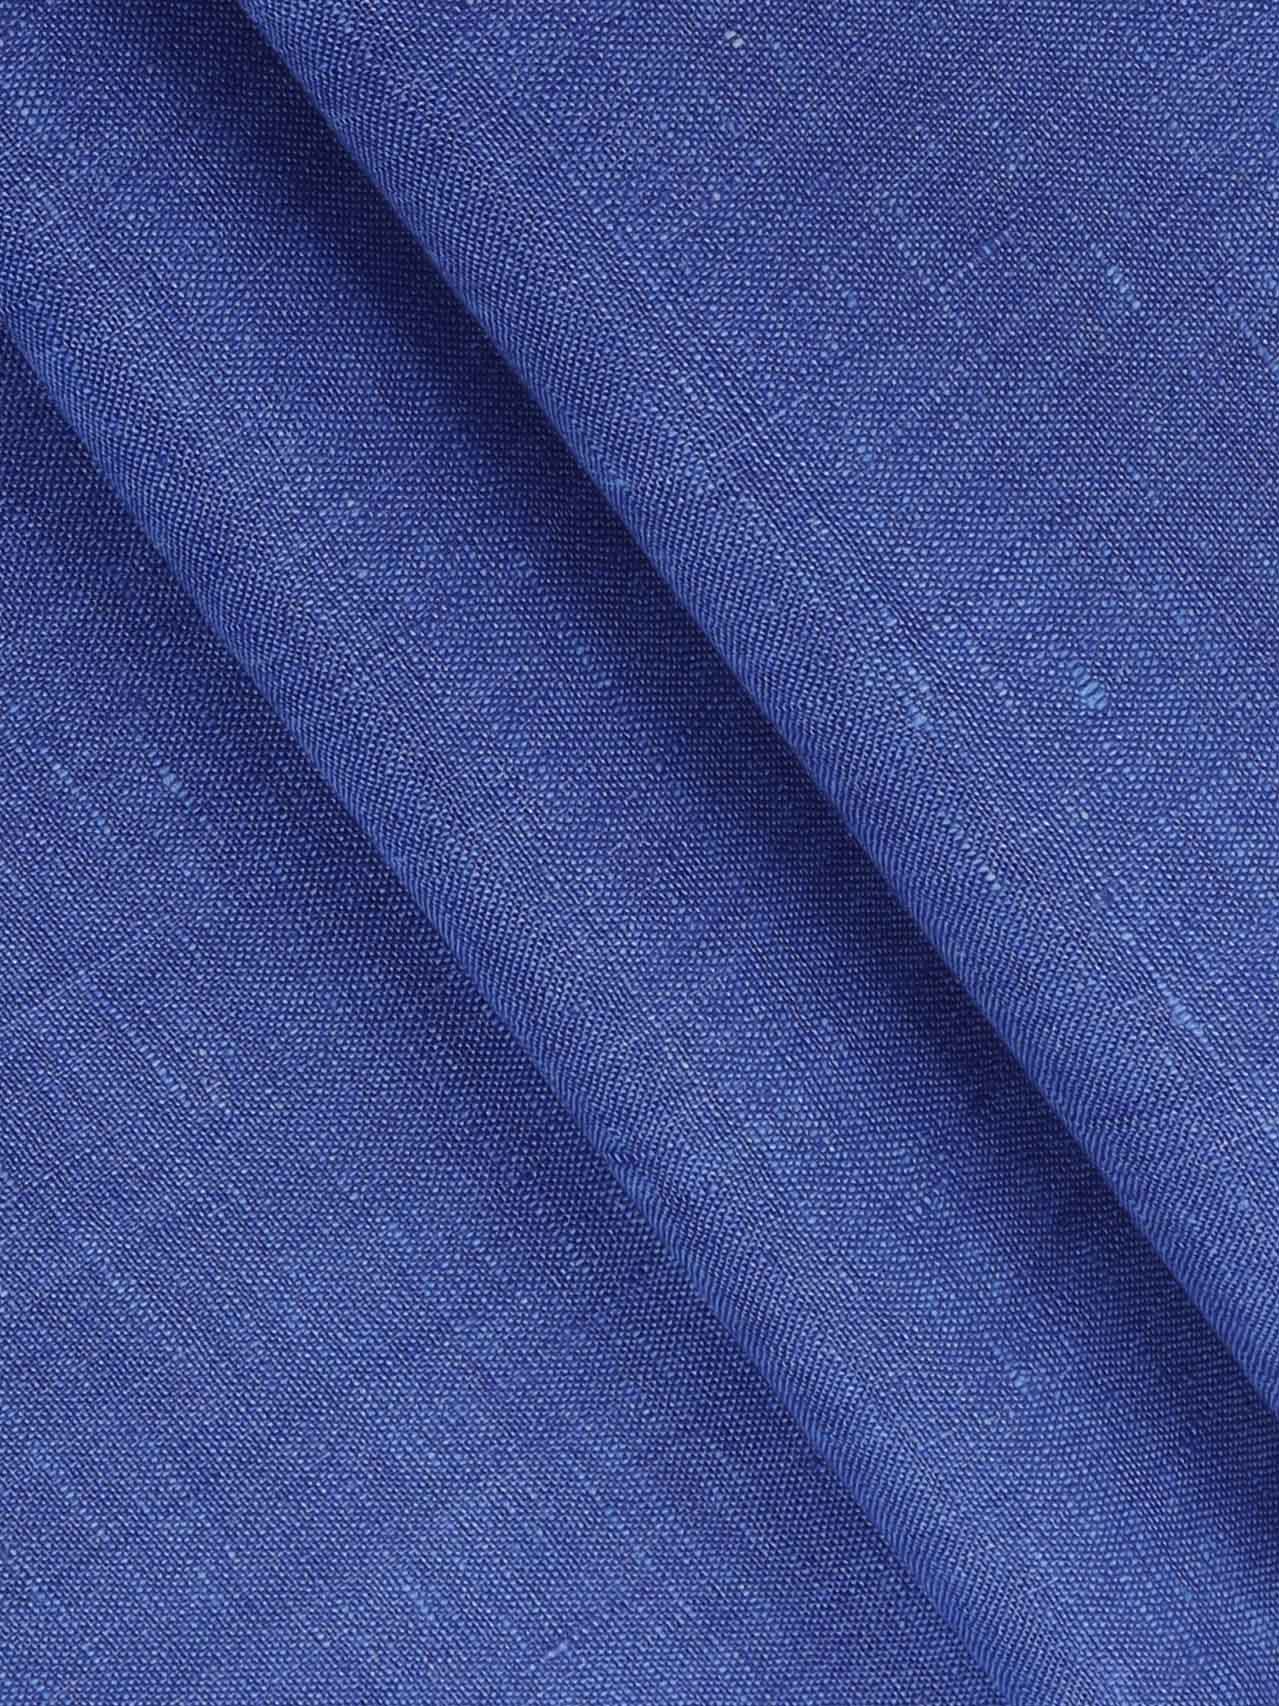 Pure Linen Colour Plain Shirt Fabric Blue Irish 8080-Pattern view